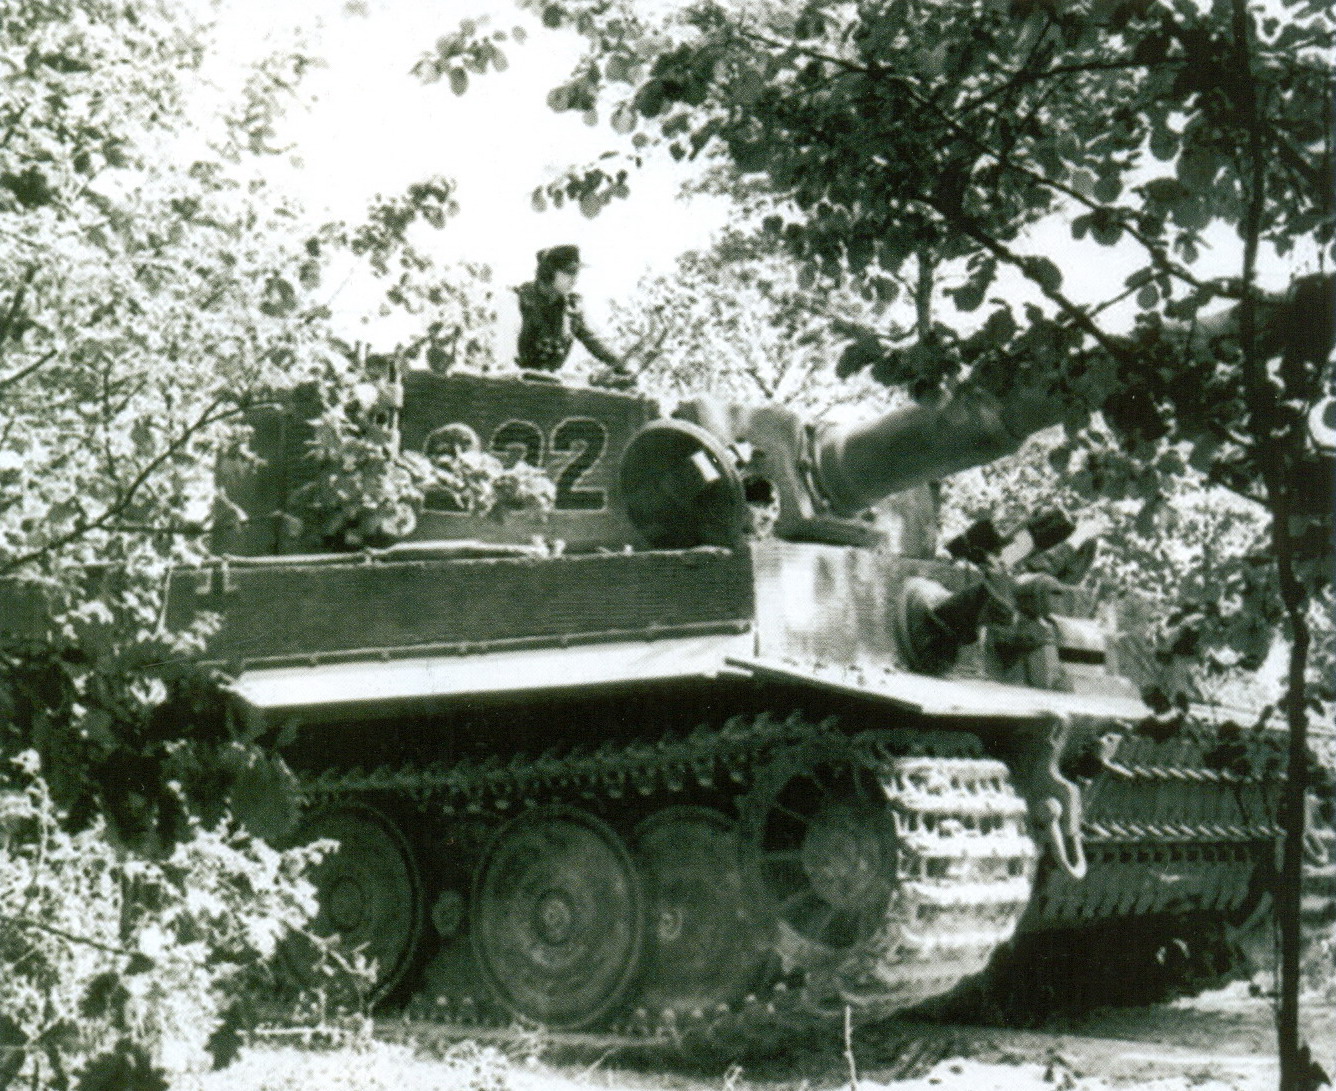 37 Panzer VI